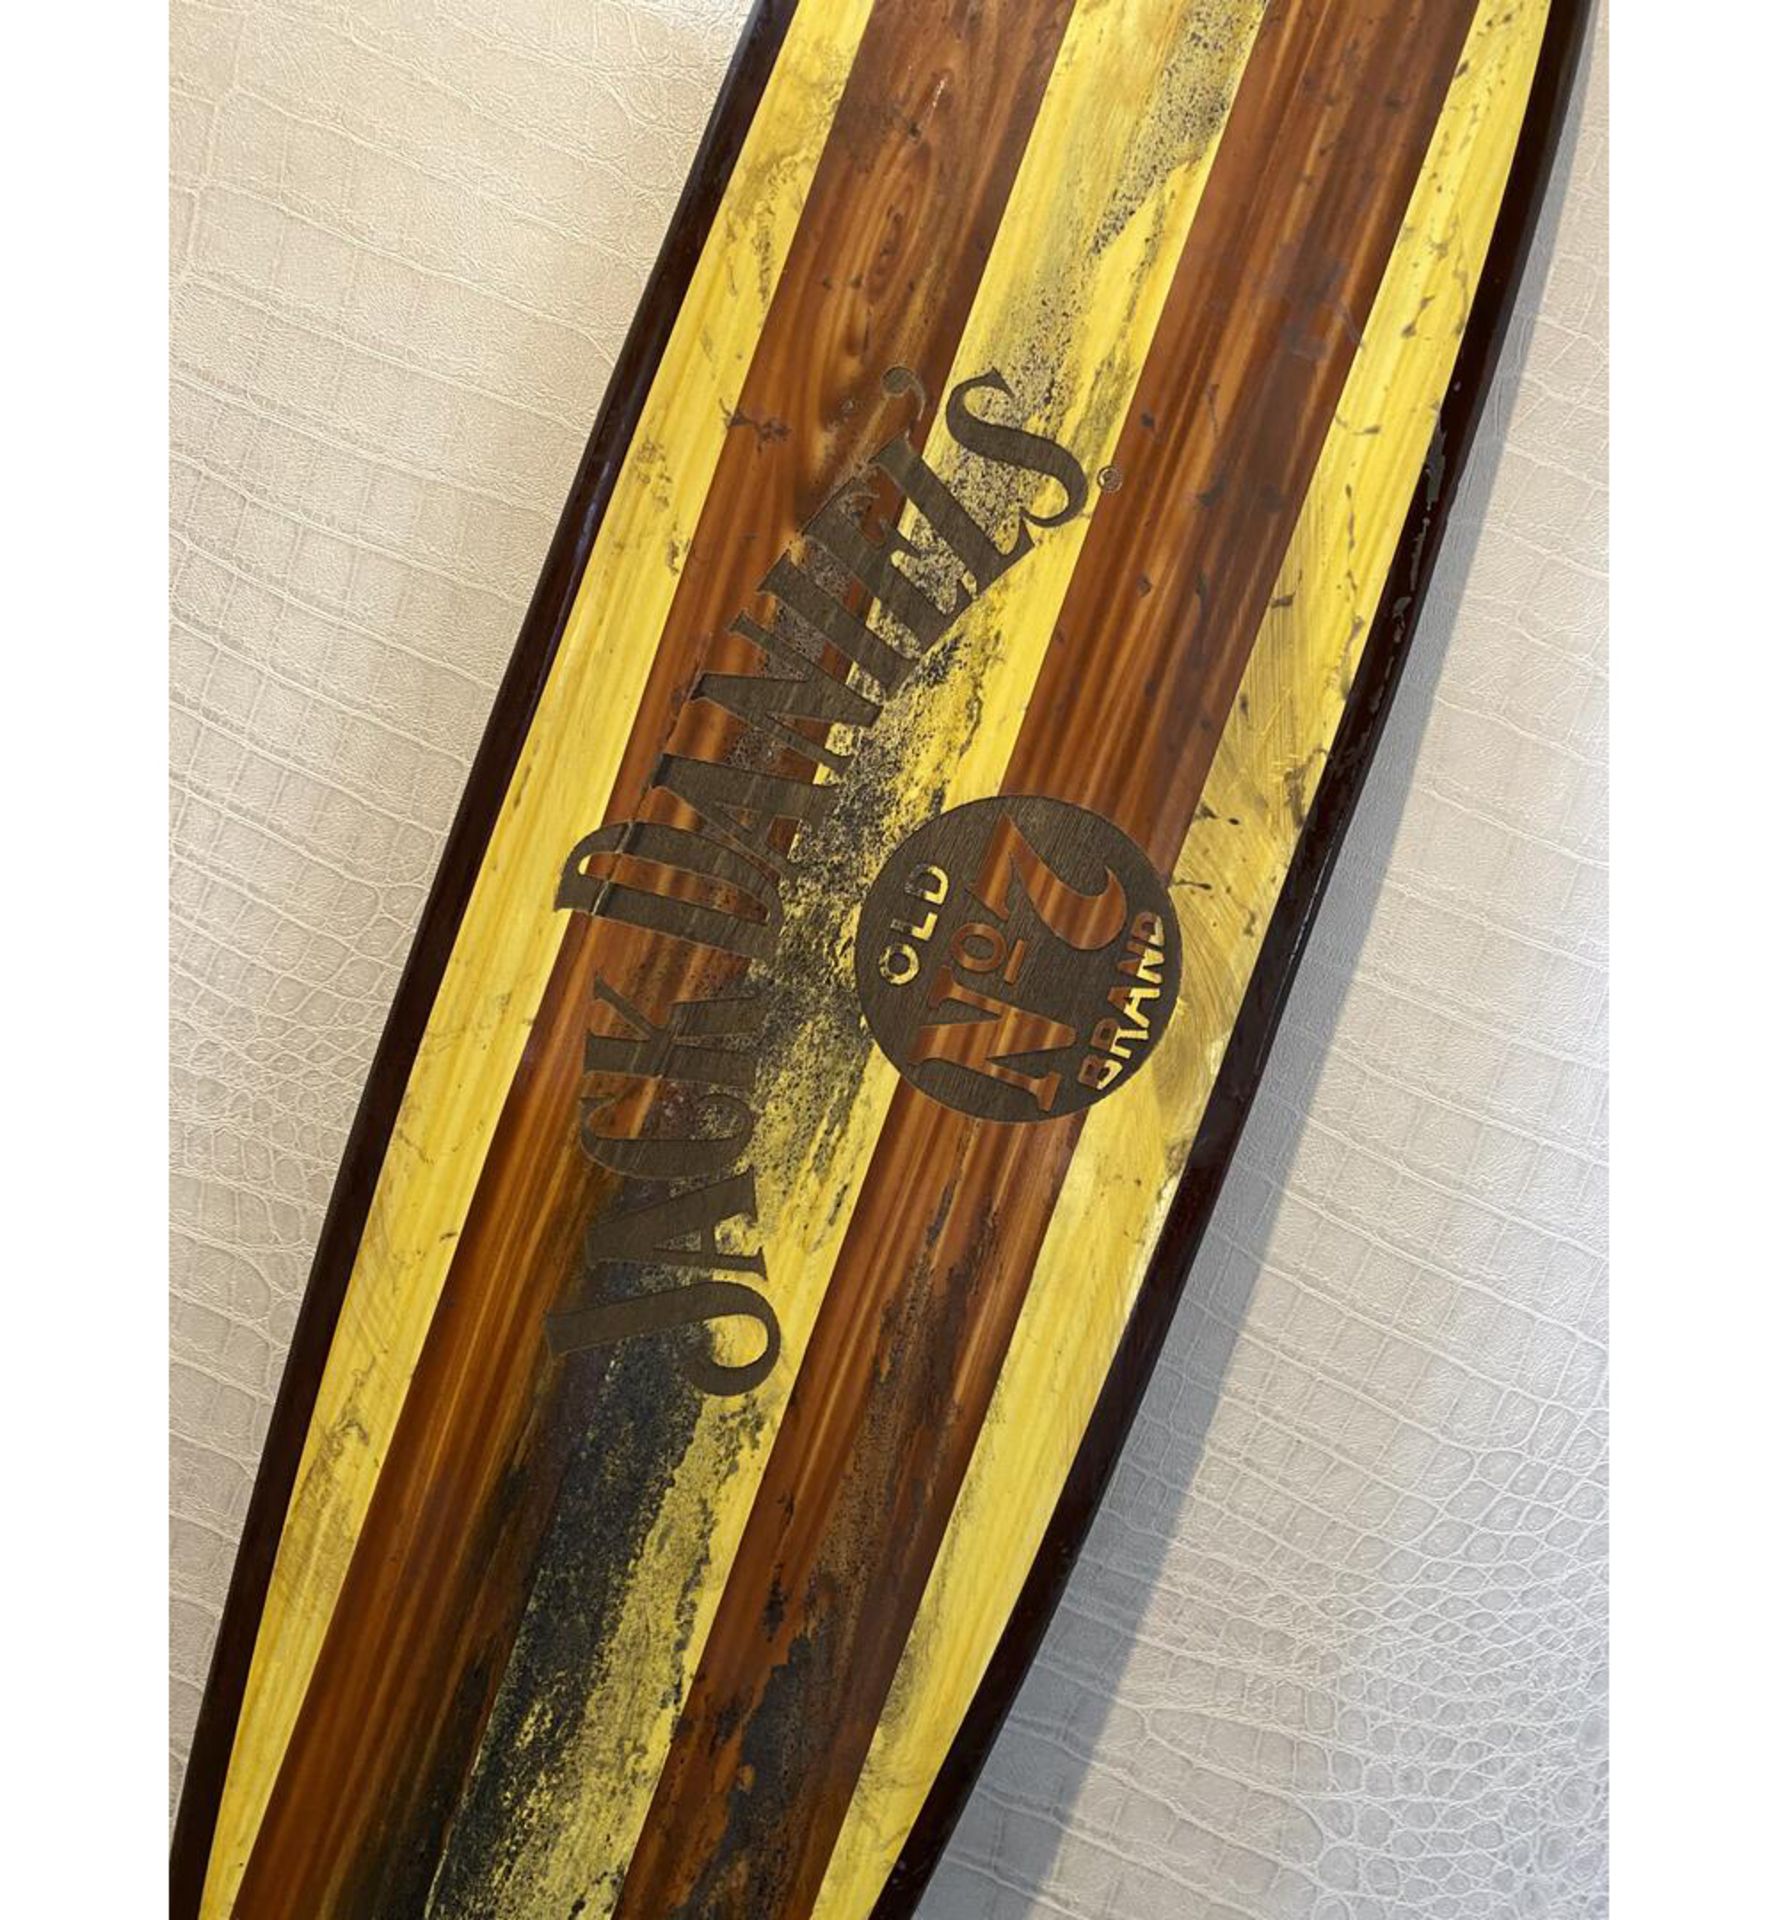 Jack Daniels Advertisement in the Shape of a Wooden Surfboard - Bild 2 aus 4